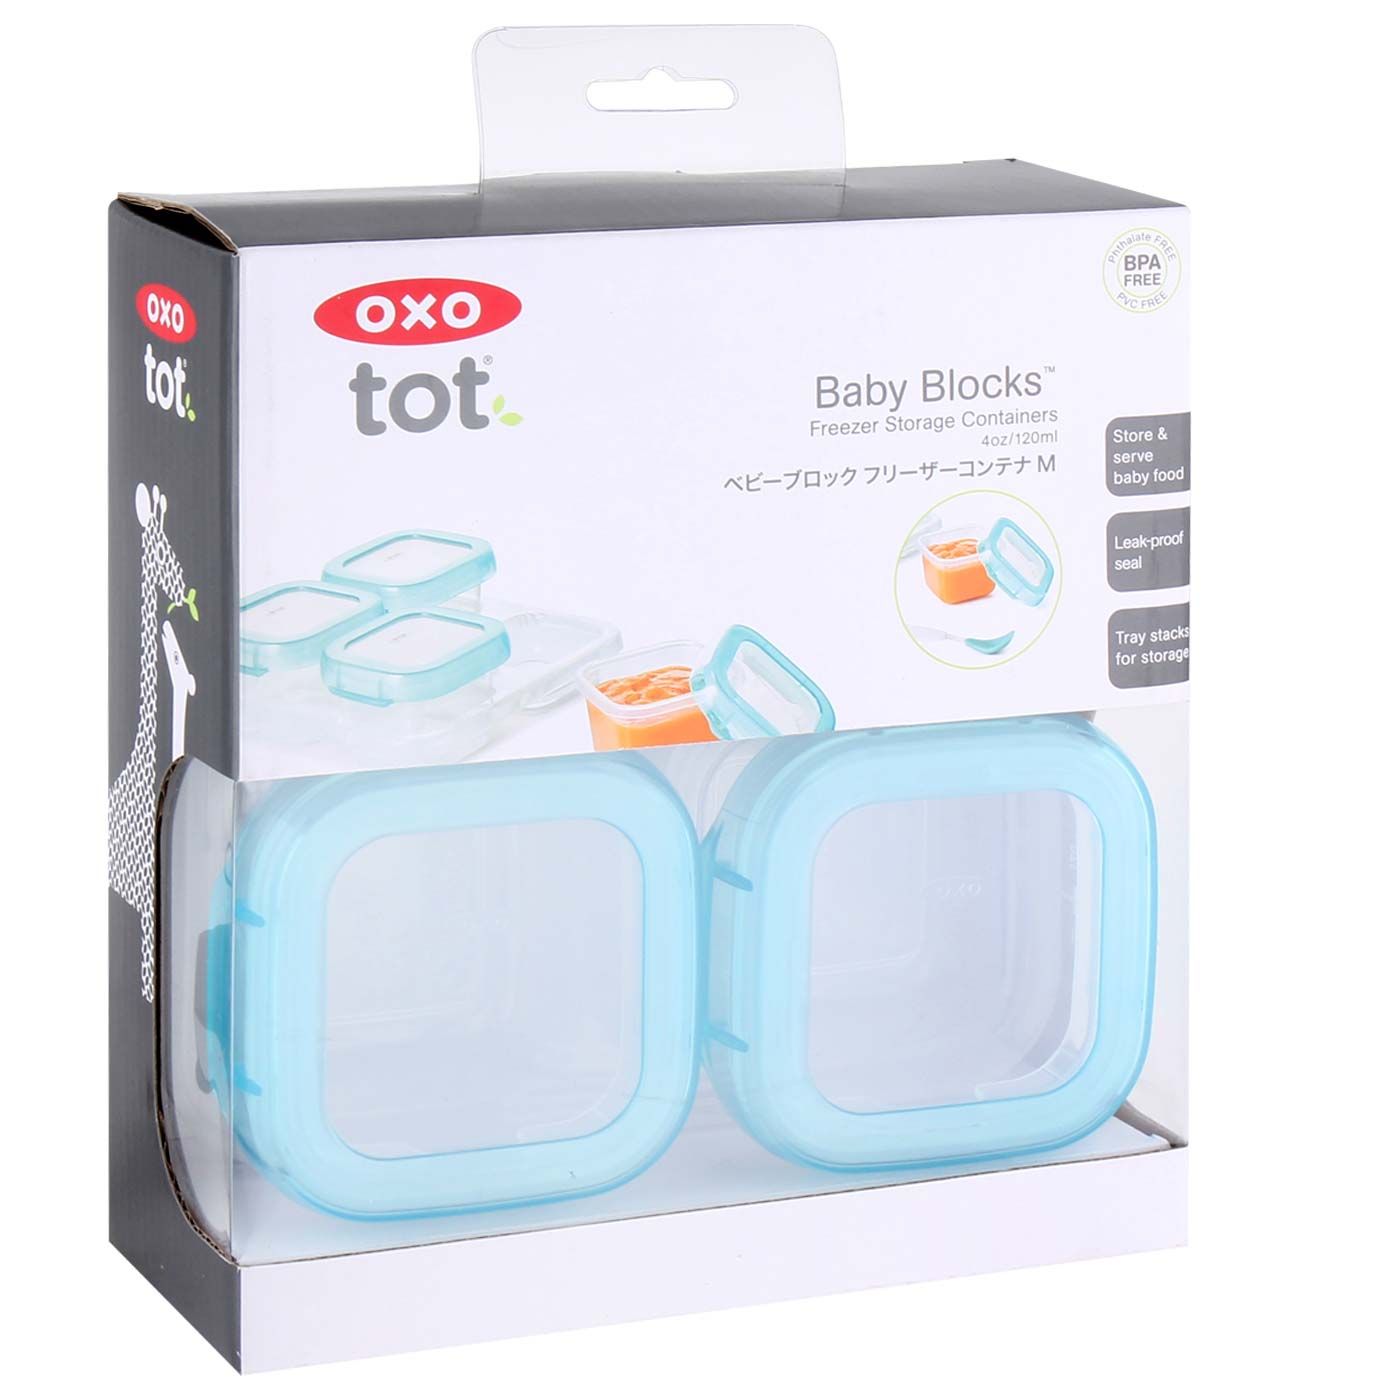 OXO Tot Baby Blocks Freezer Storage Containers 4oz Aqua - 6